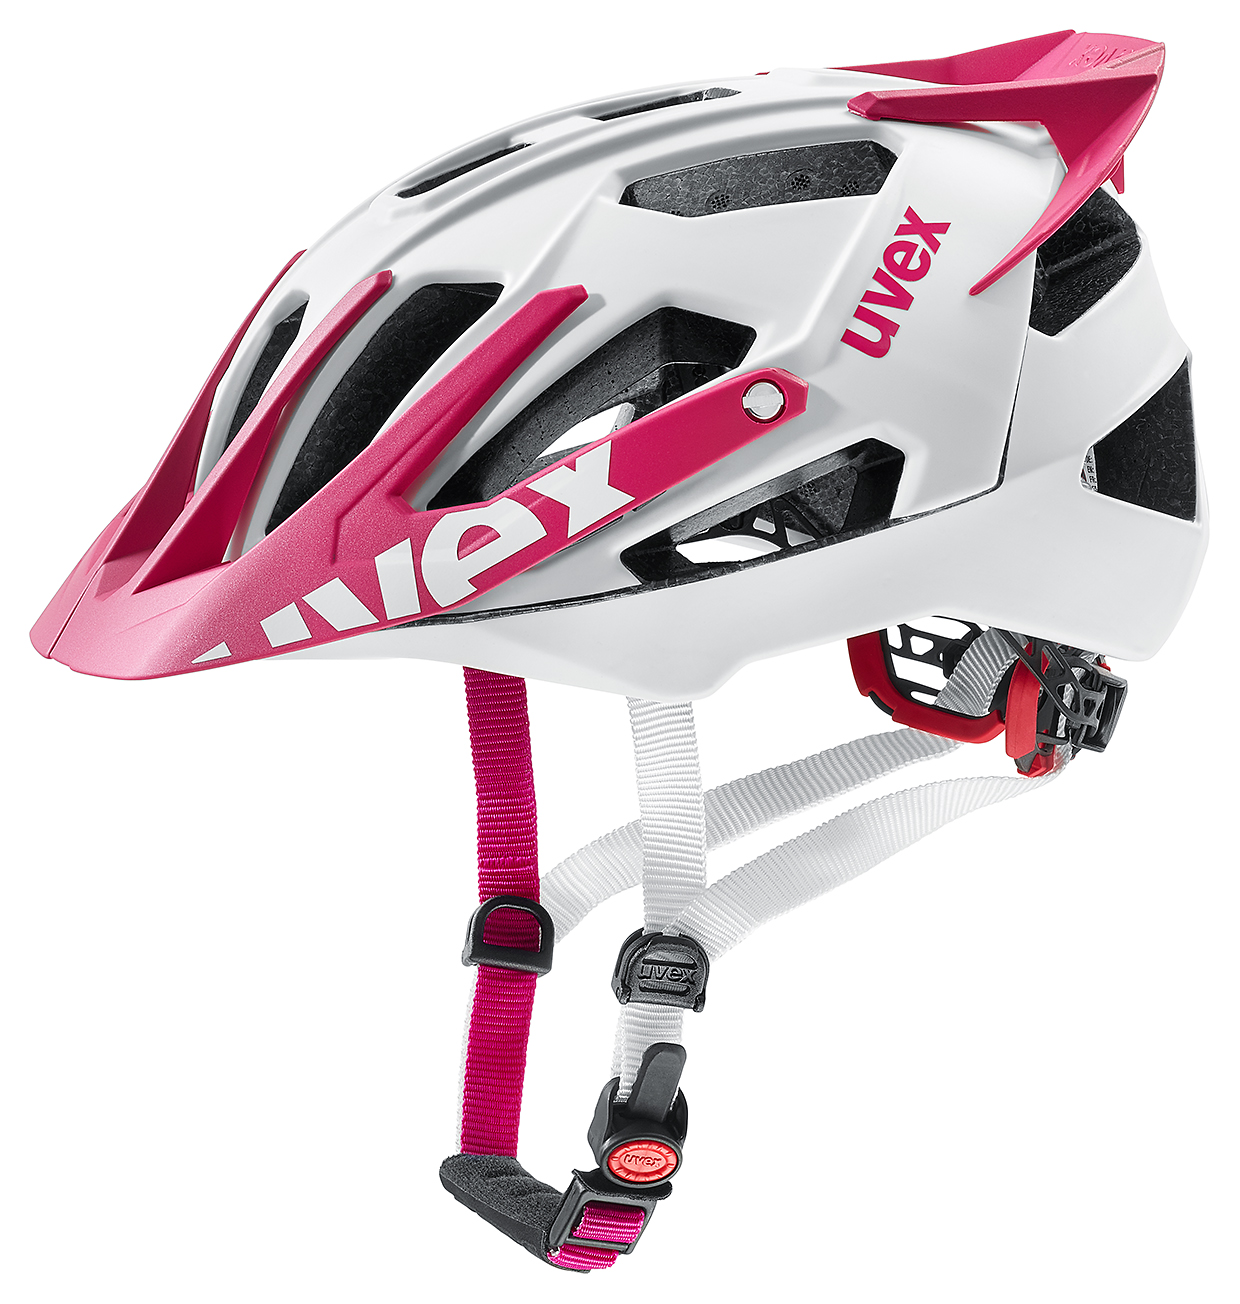 Uvex Quatro Pro Damen MTB Fahrrad Helm Gr. 5257cm weiß